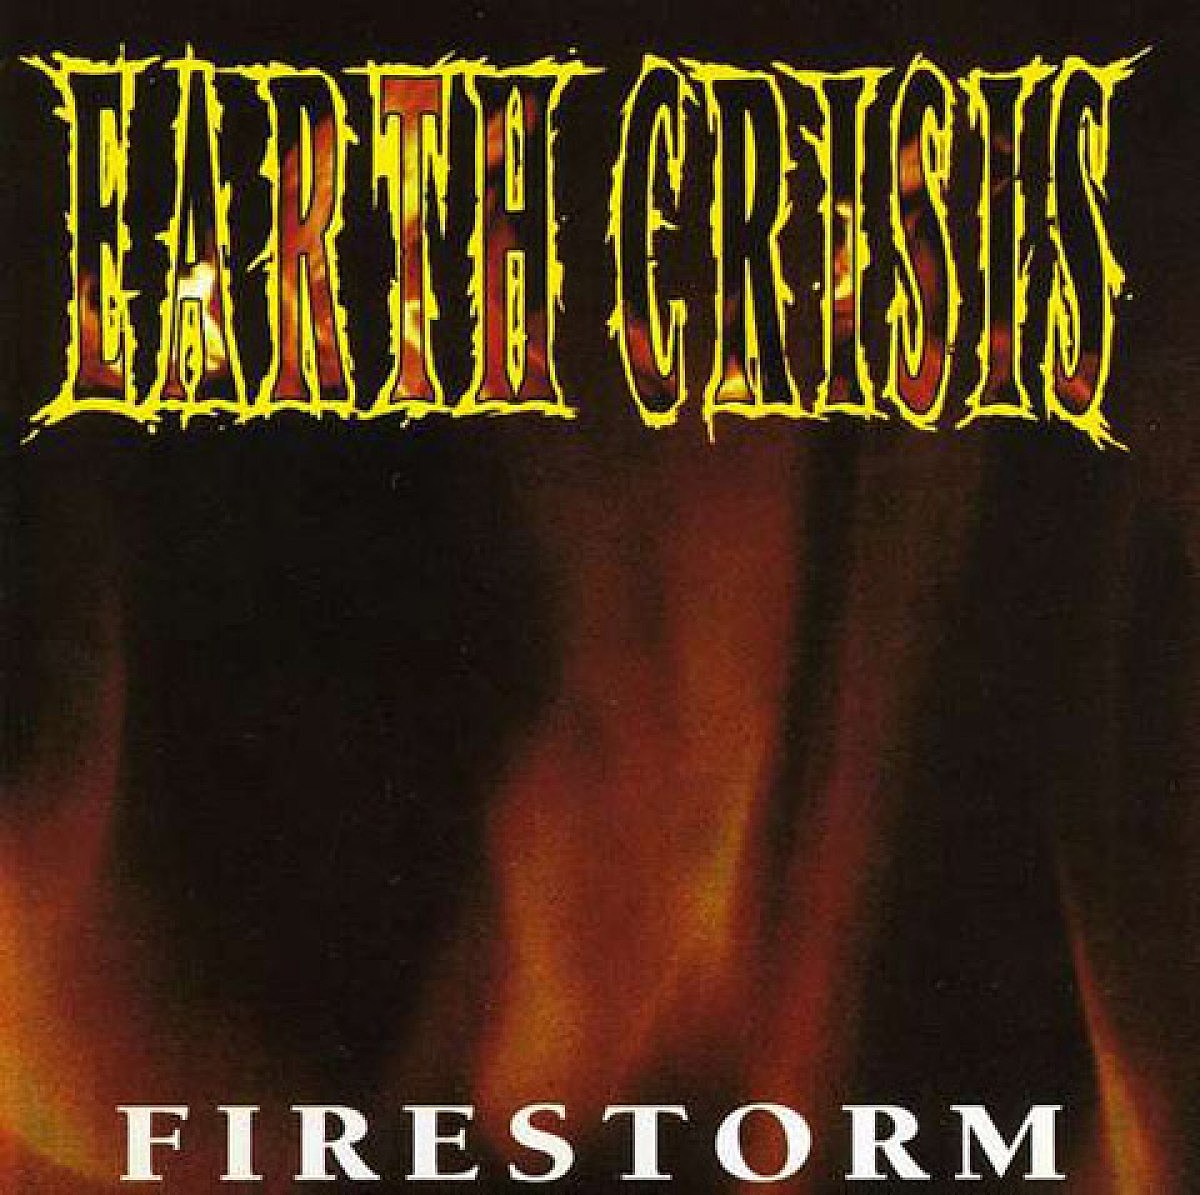 Earth Crisis ‘Firestorm’ [EP] album artwork